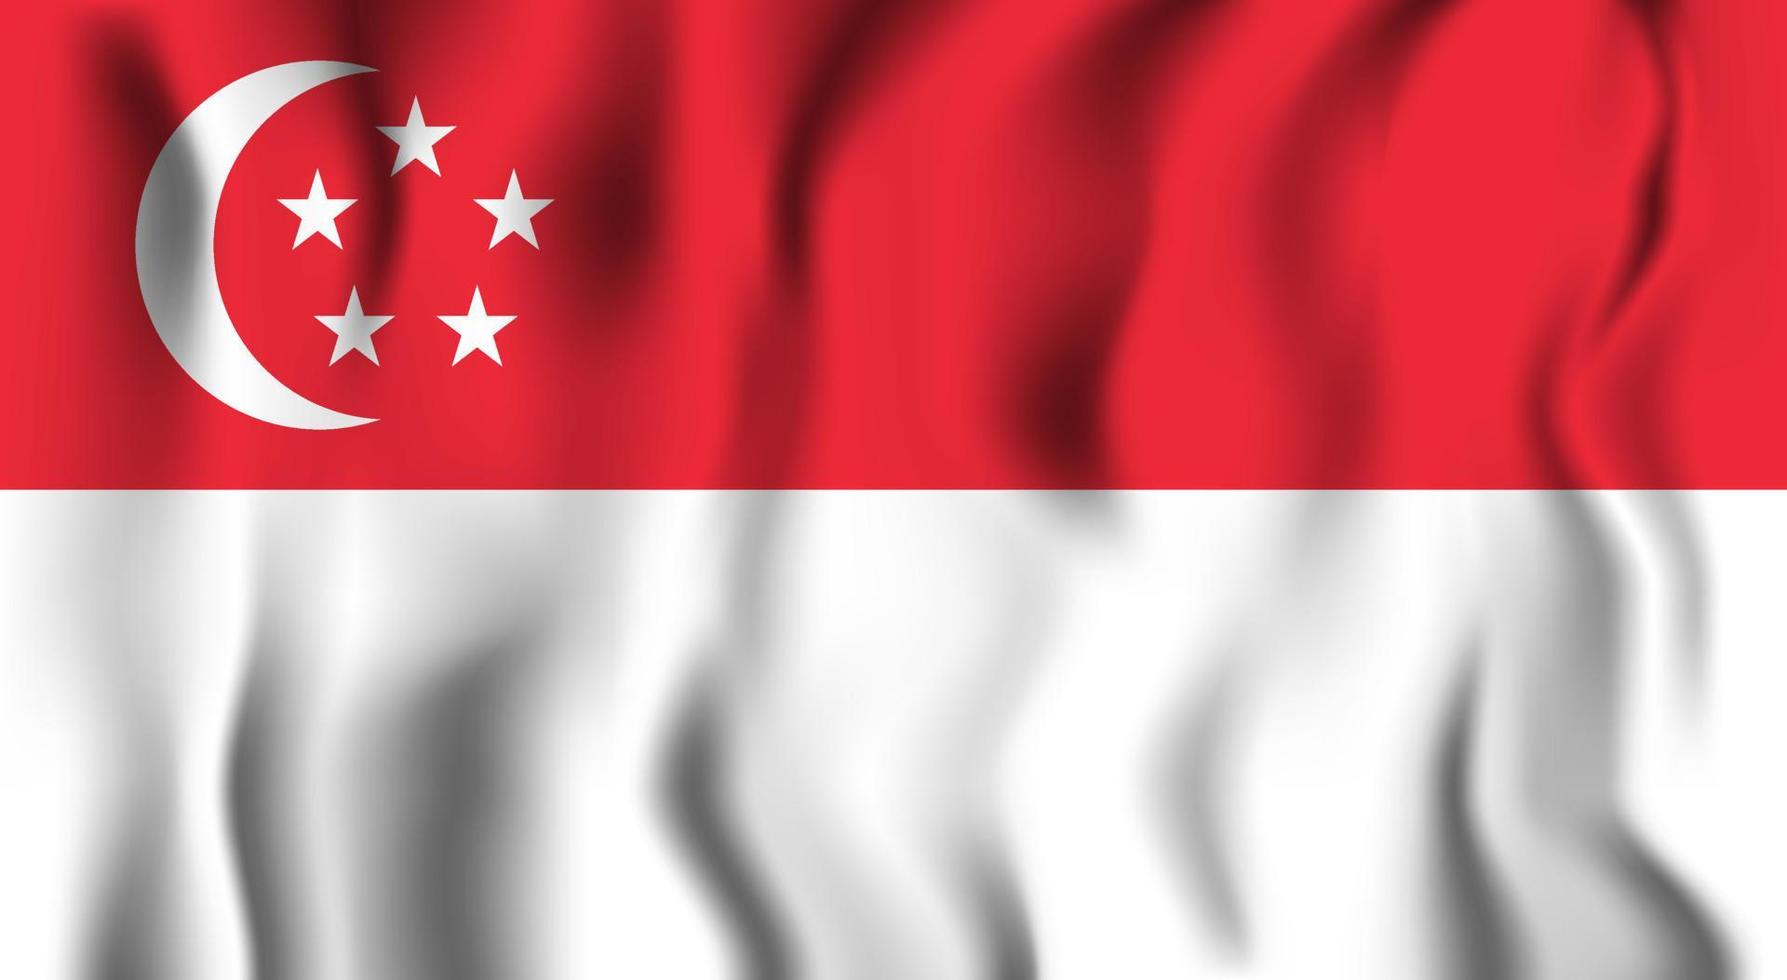 singapore national flag vector